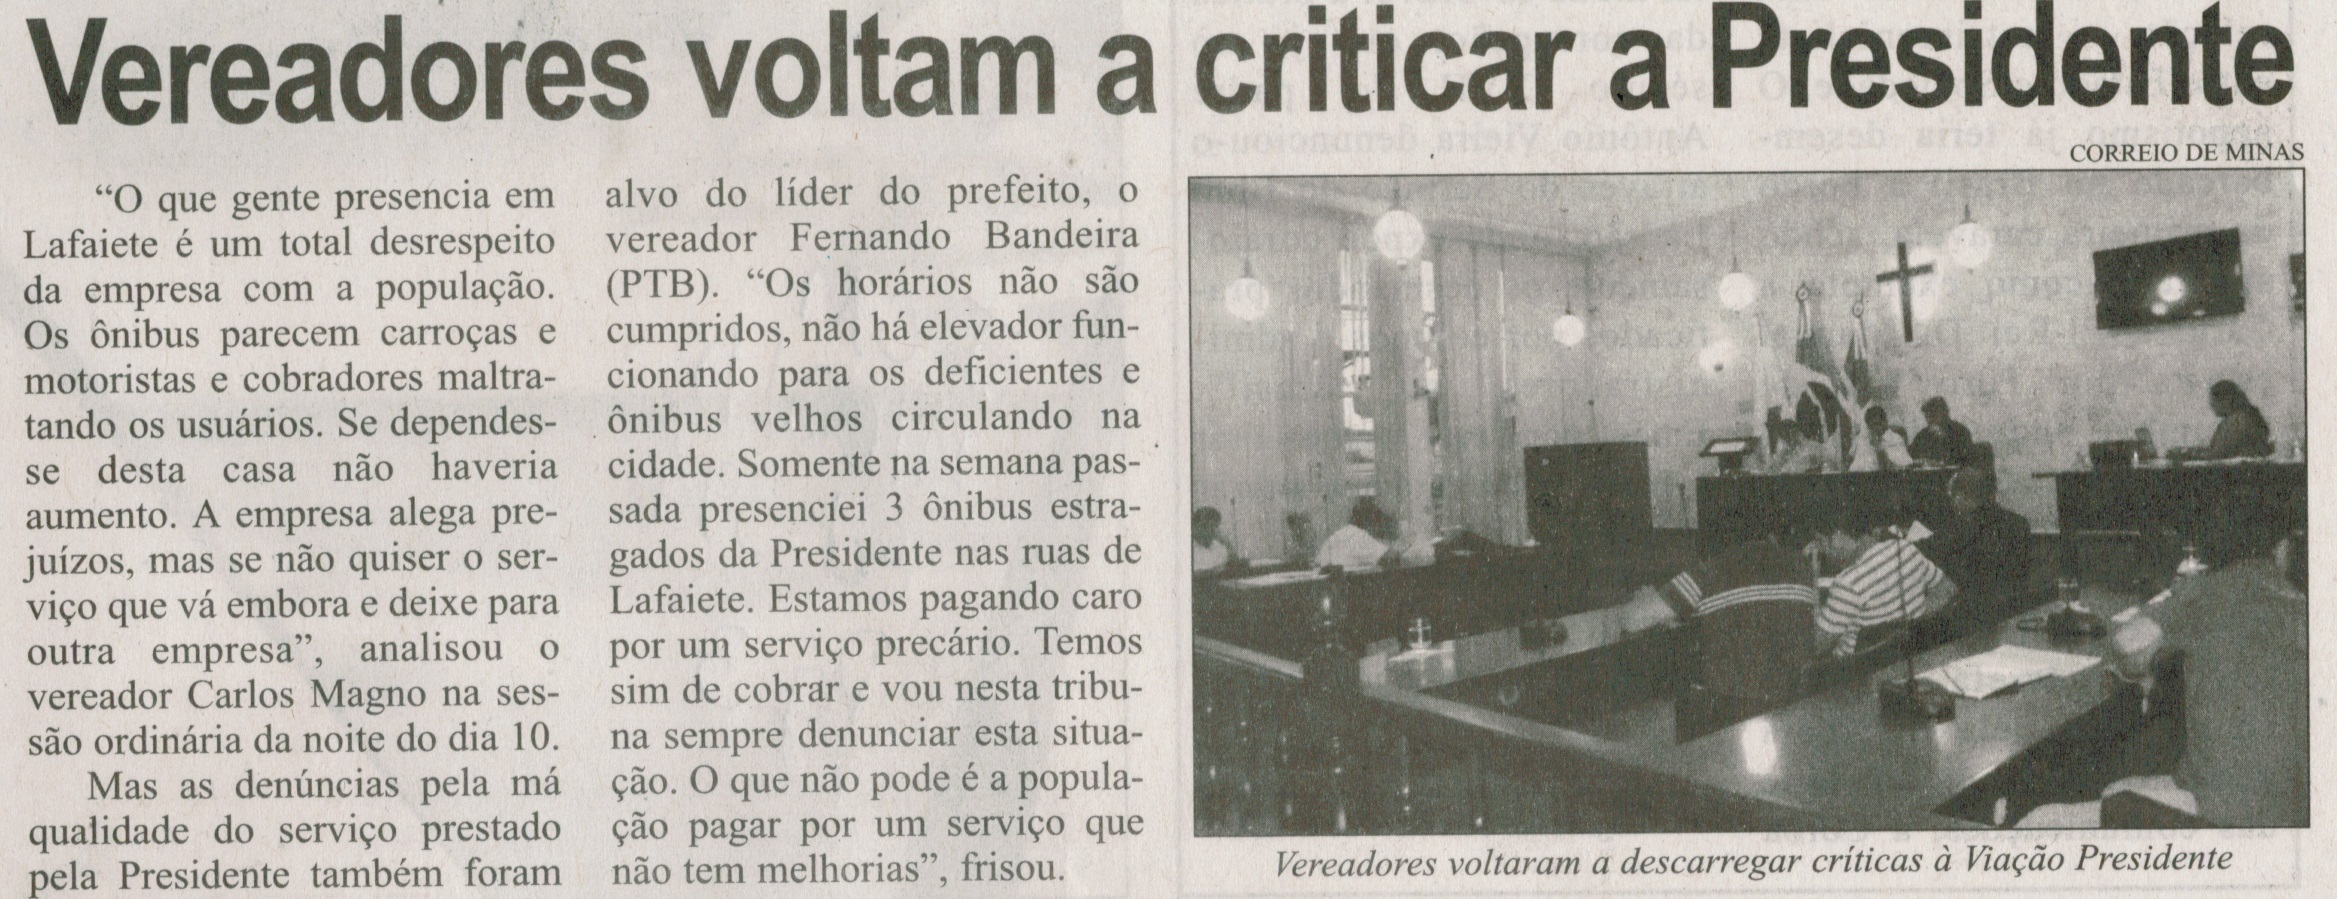  Vereadores voltam a criticar a Presidente. Correio de Minas, Conselheiro Lafaiete,  14 fev. 2015, p. 3.